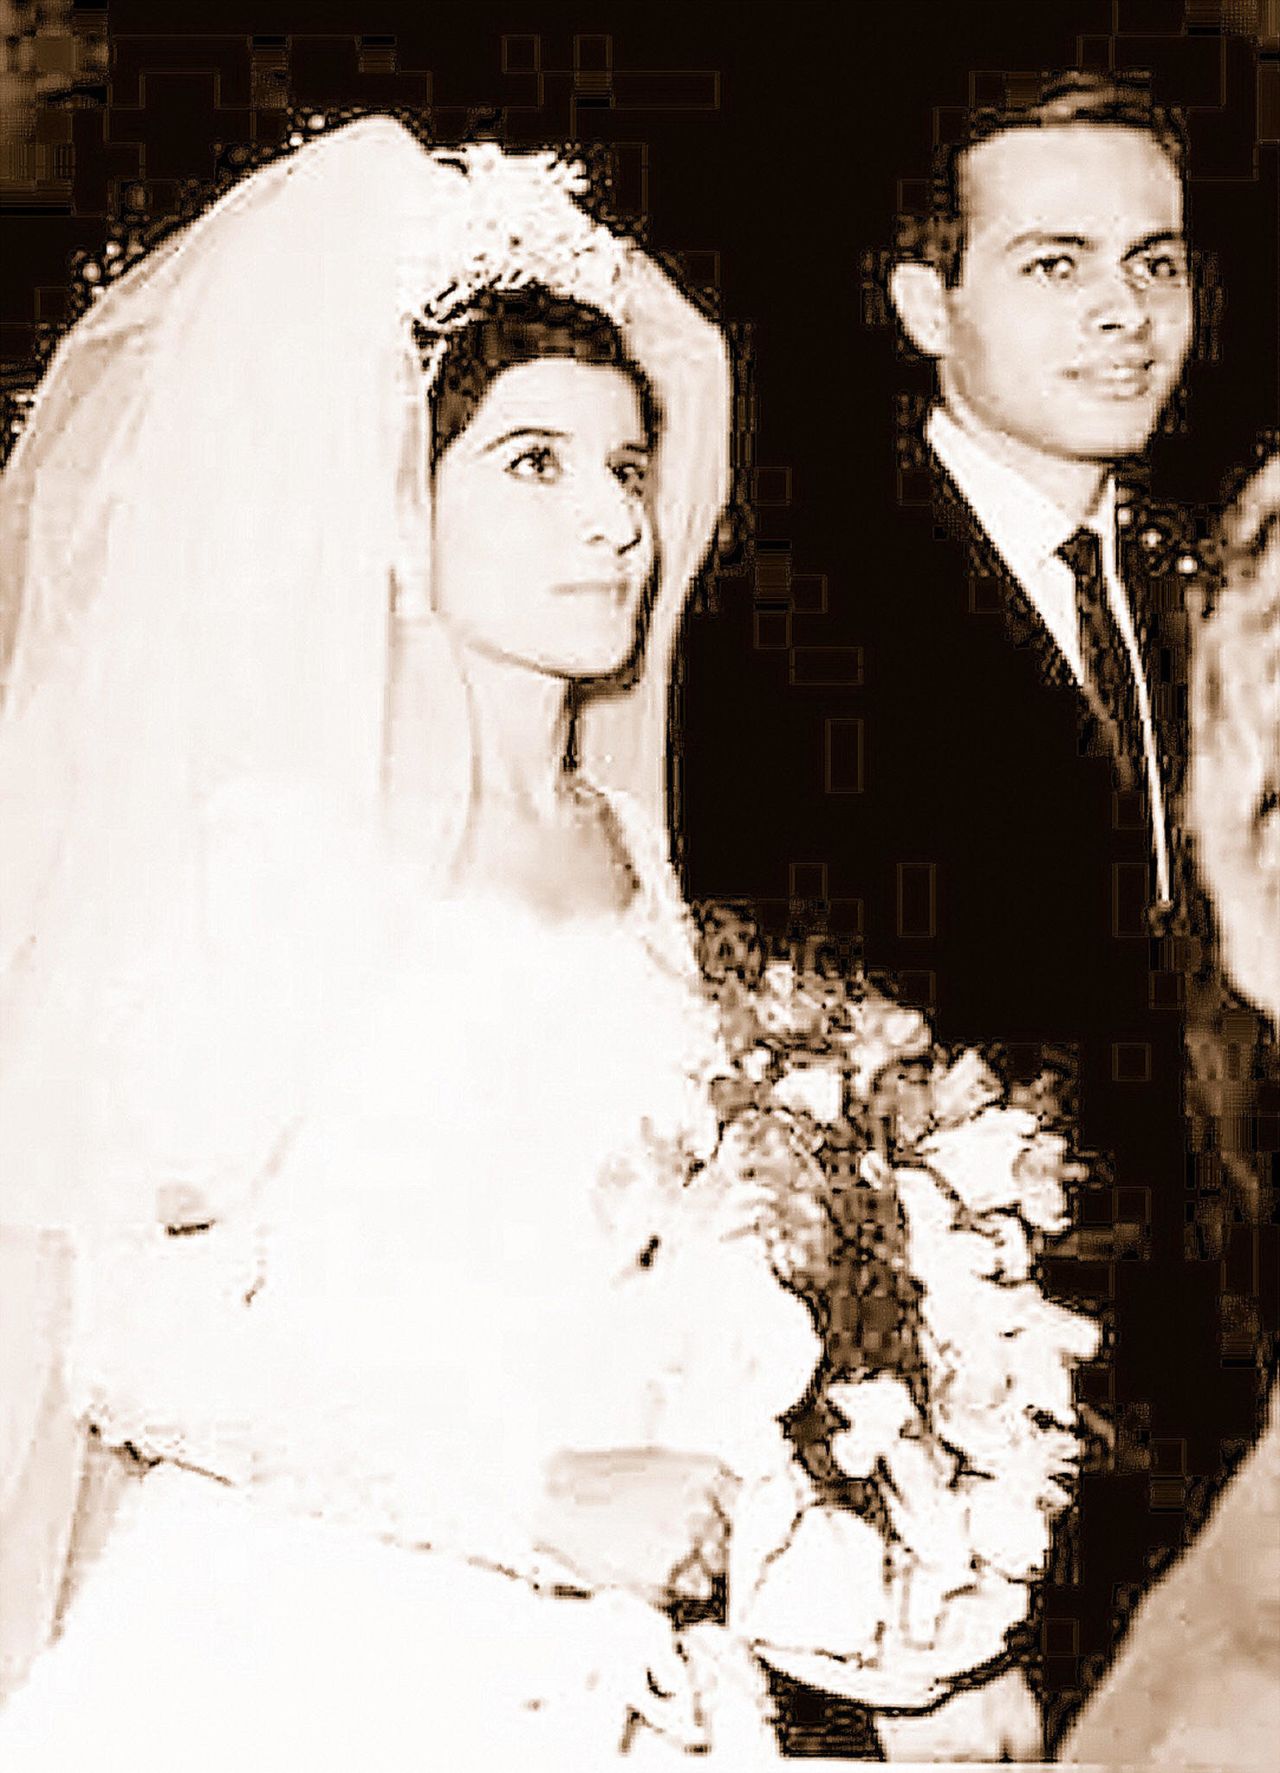 Egyptian billionaire Ashraf Marwan on his wedding day with his bride Mona Abdel Nasser, daughter of late Egyptian president Gamal Abdel Nasser. 